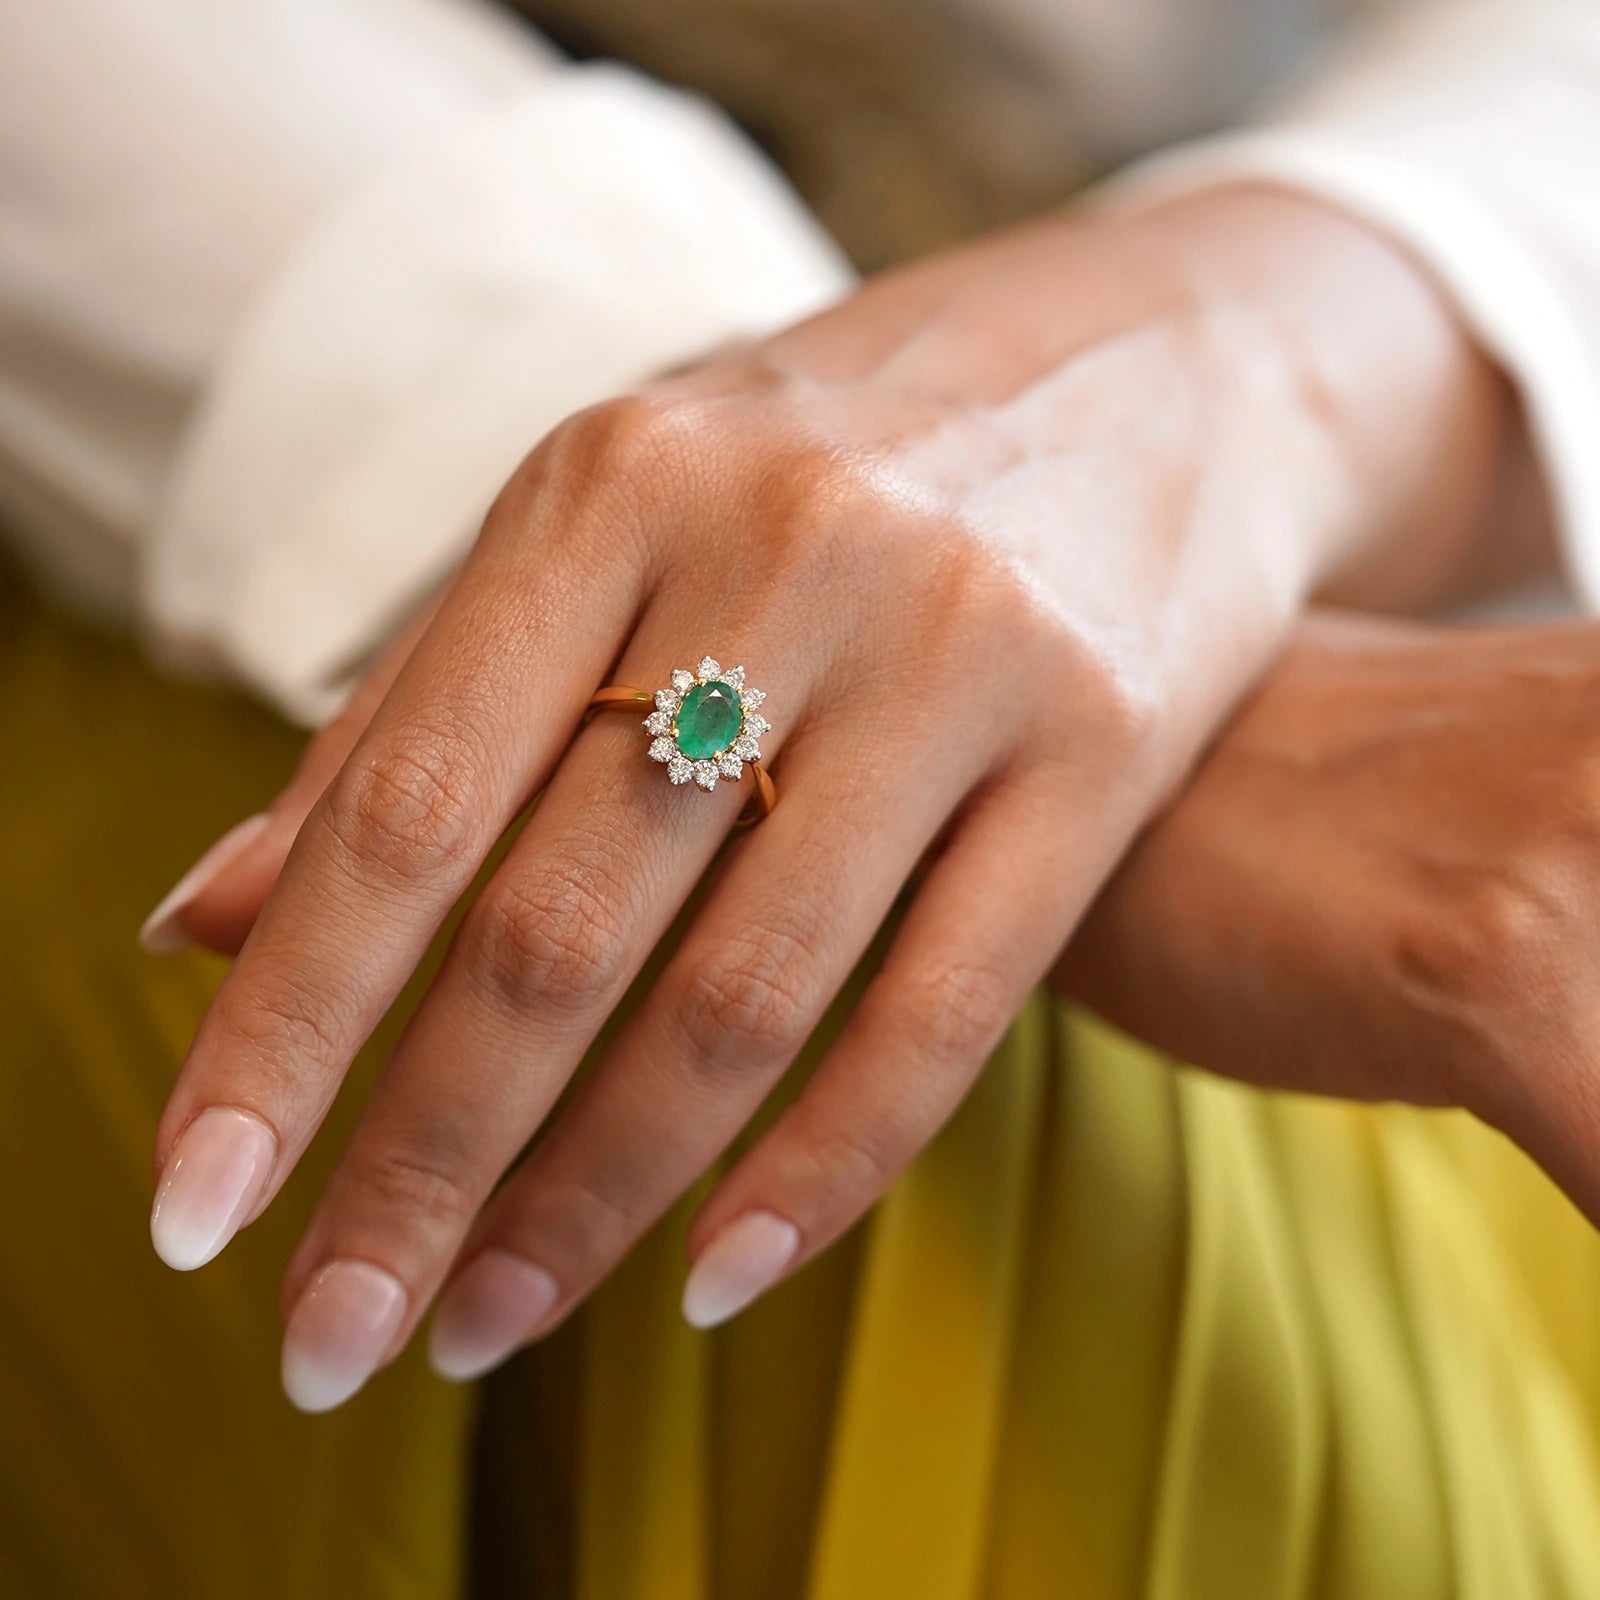 Venice Emerald Ring